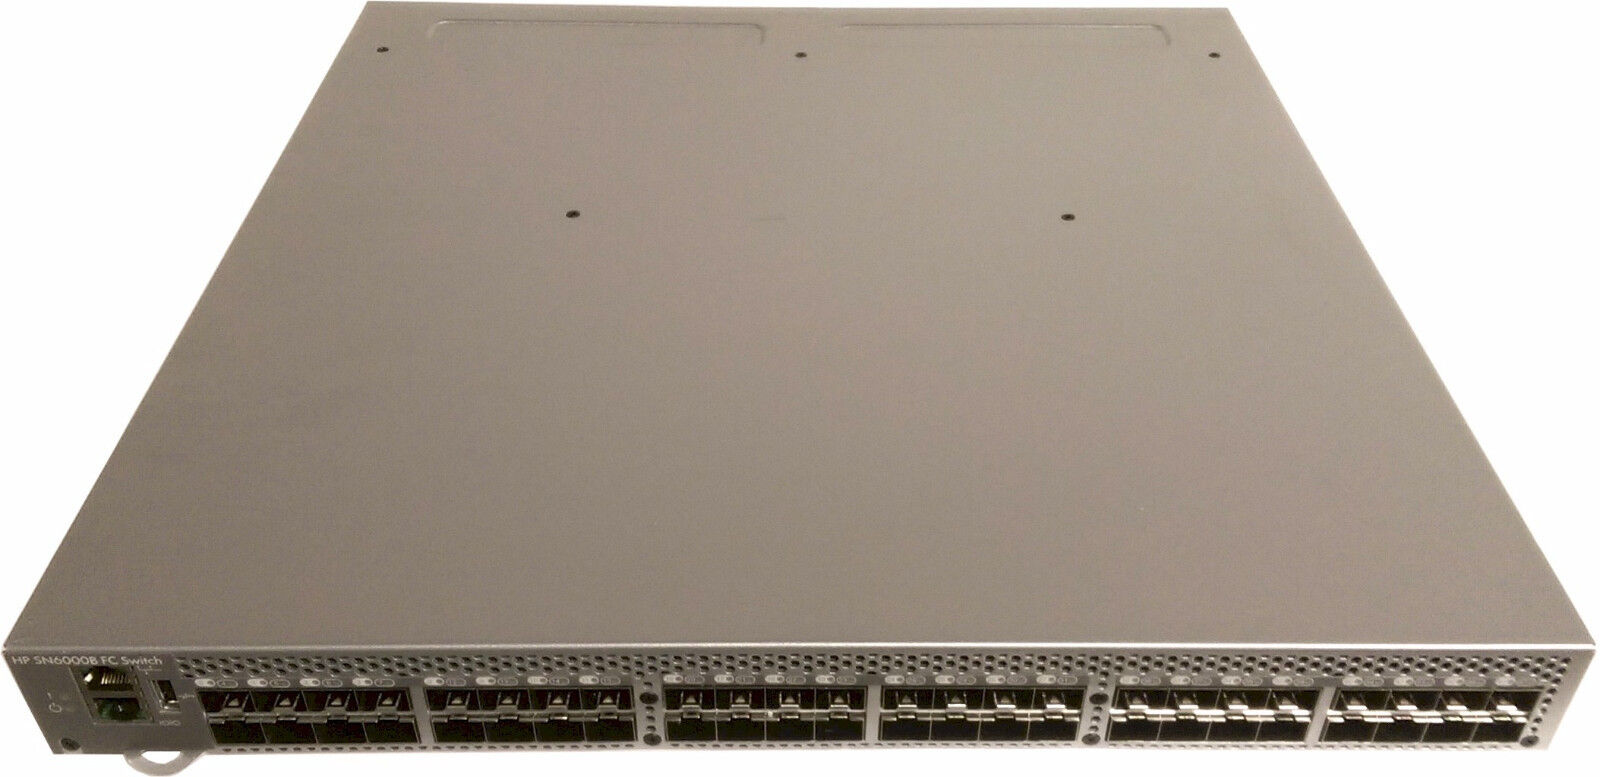 HP SN6000B / Brocade 6510 48-Port / 24A 16Gb Fibre Channel Switch w/Power Pack+